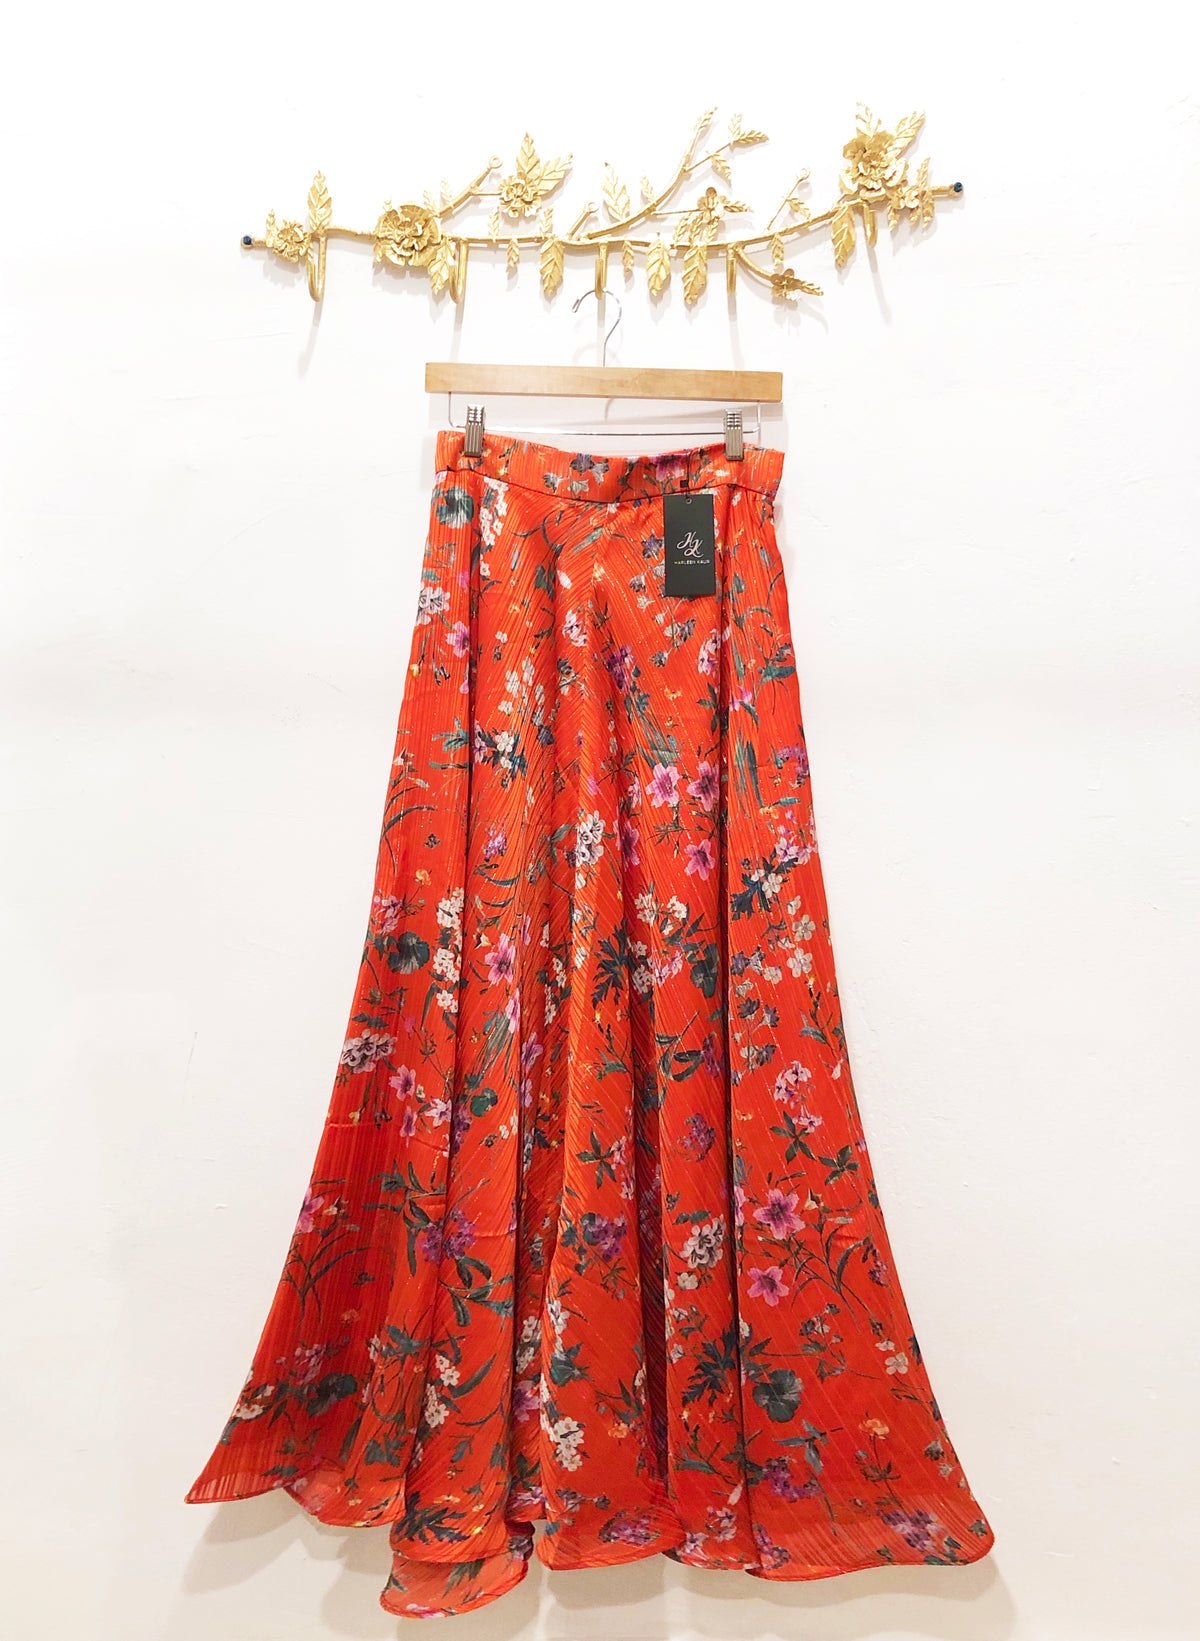 Hila Red Metallic Satin Skirt